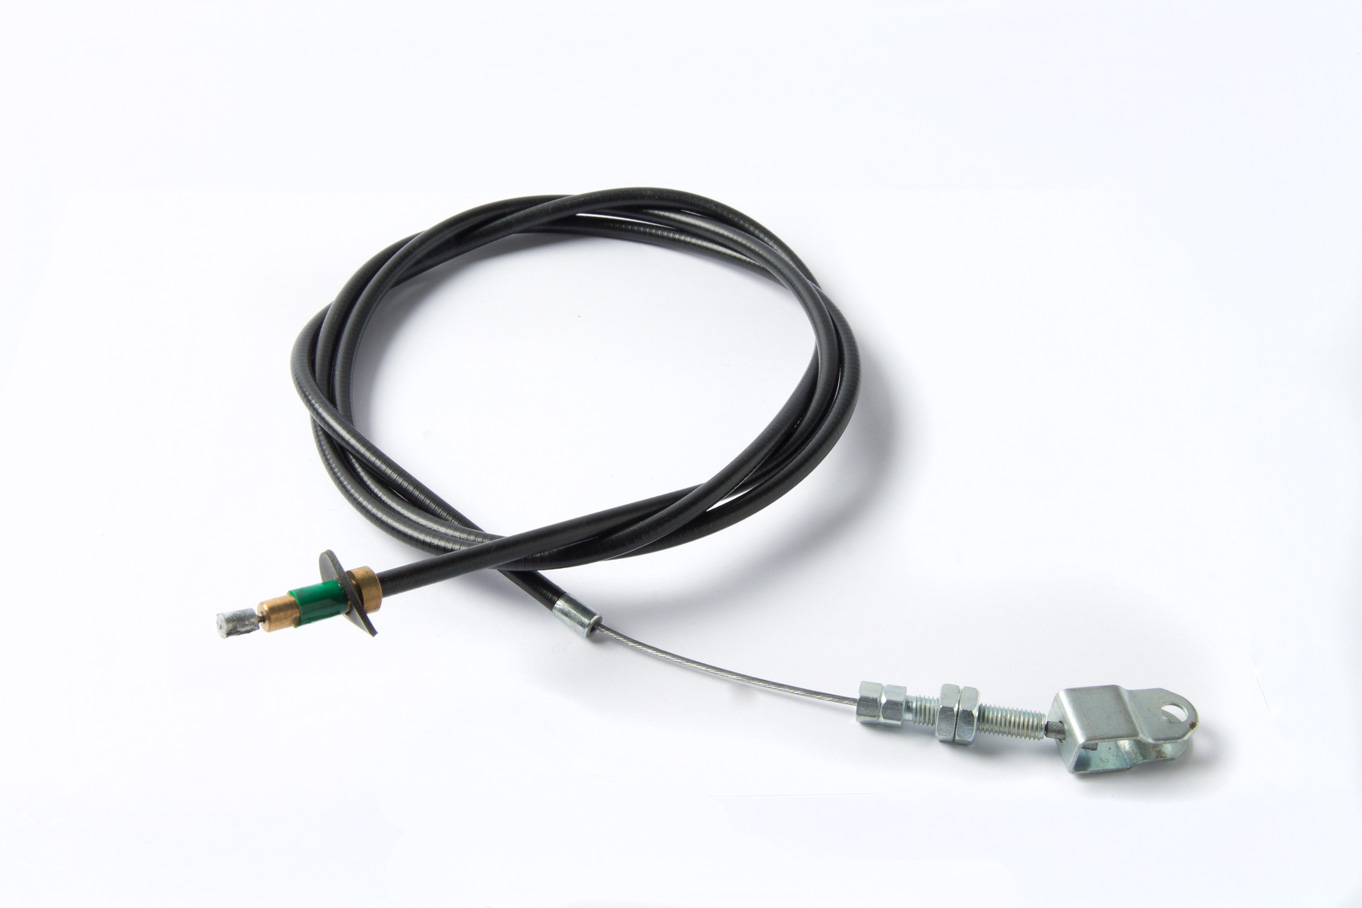 Gaszug
Accelerator cable
Câble d'accélérateur